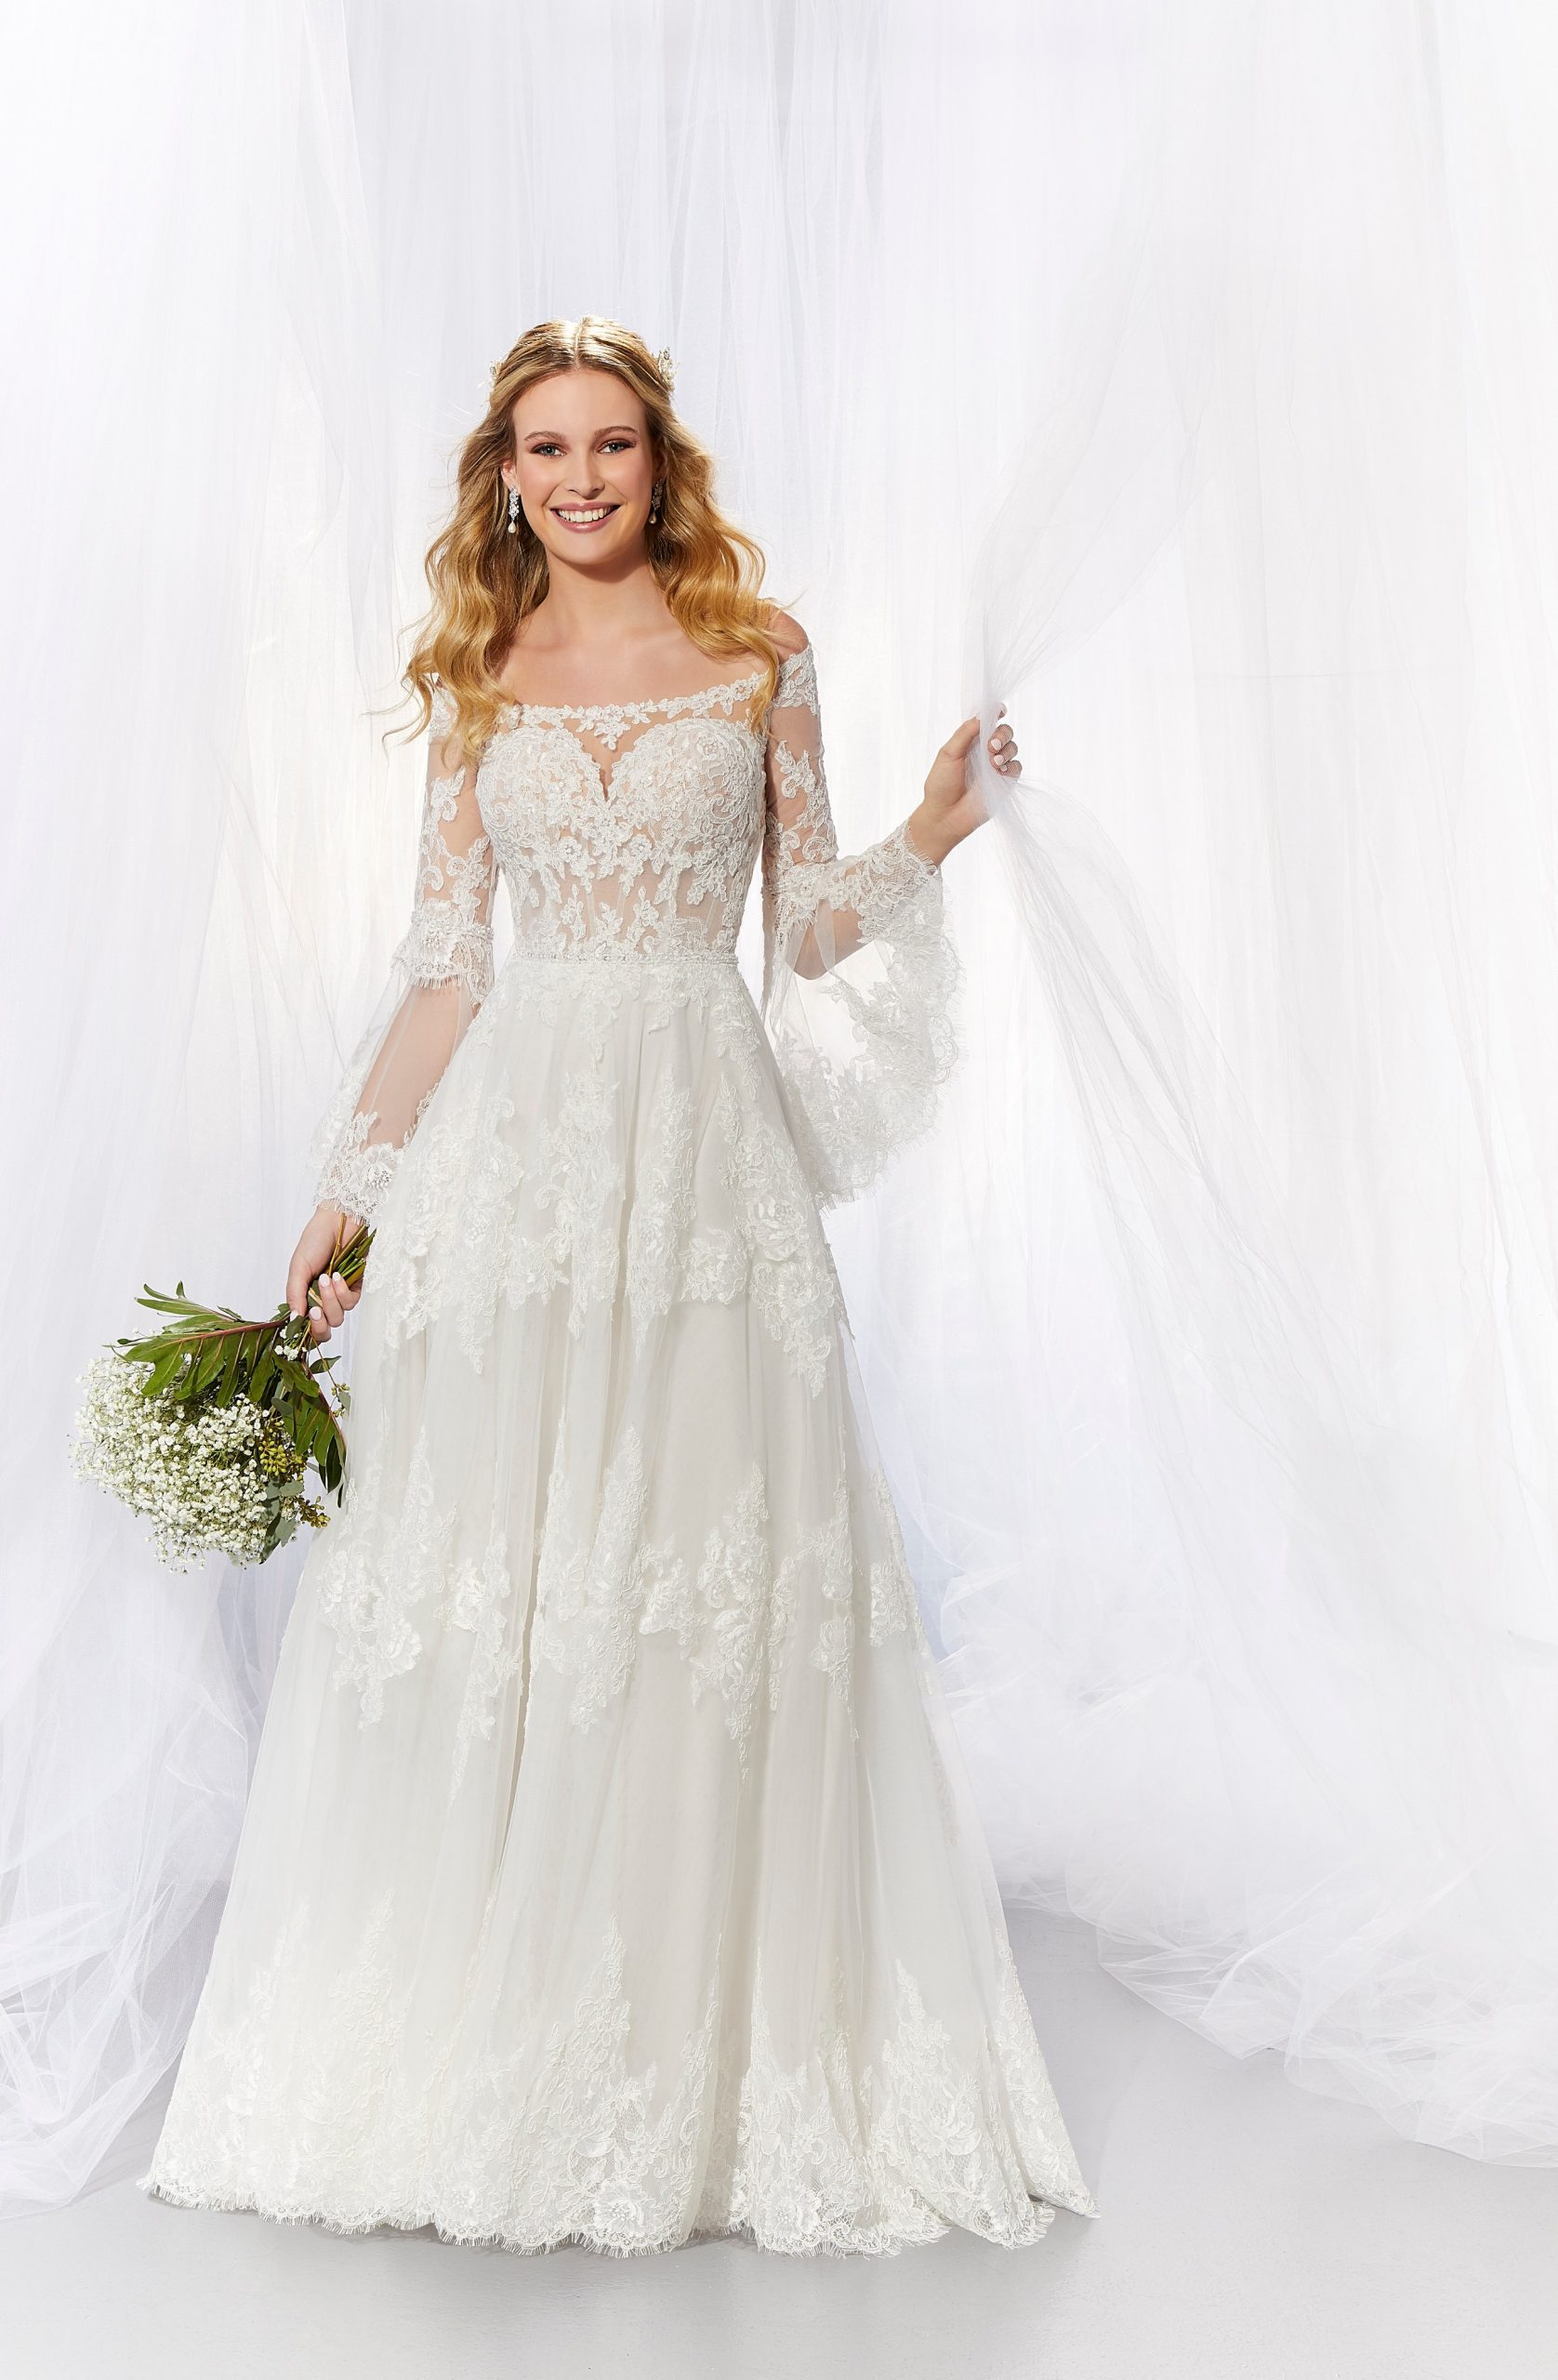 Long Sleeve Wedding Dresses Top 10 long sleeve wedding dresses - Find ...